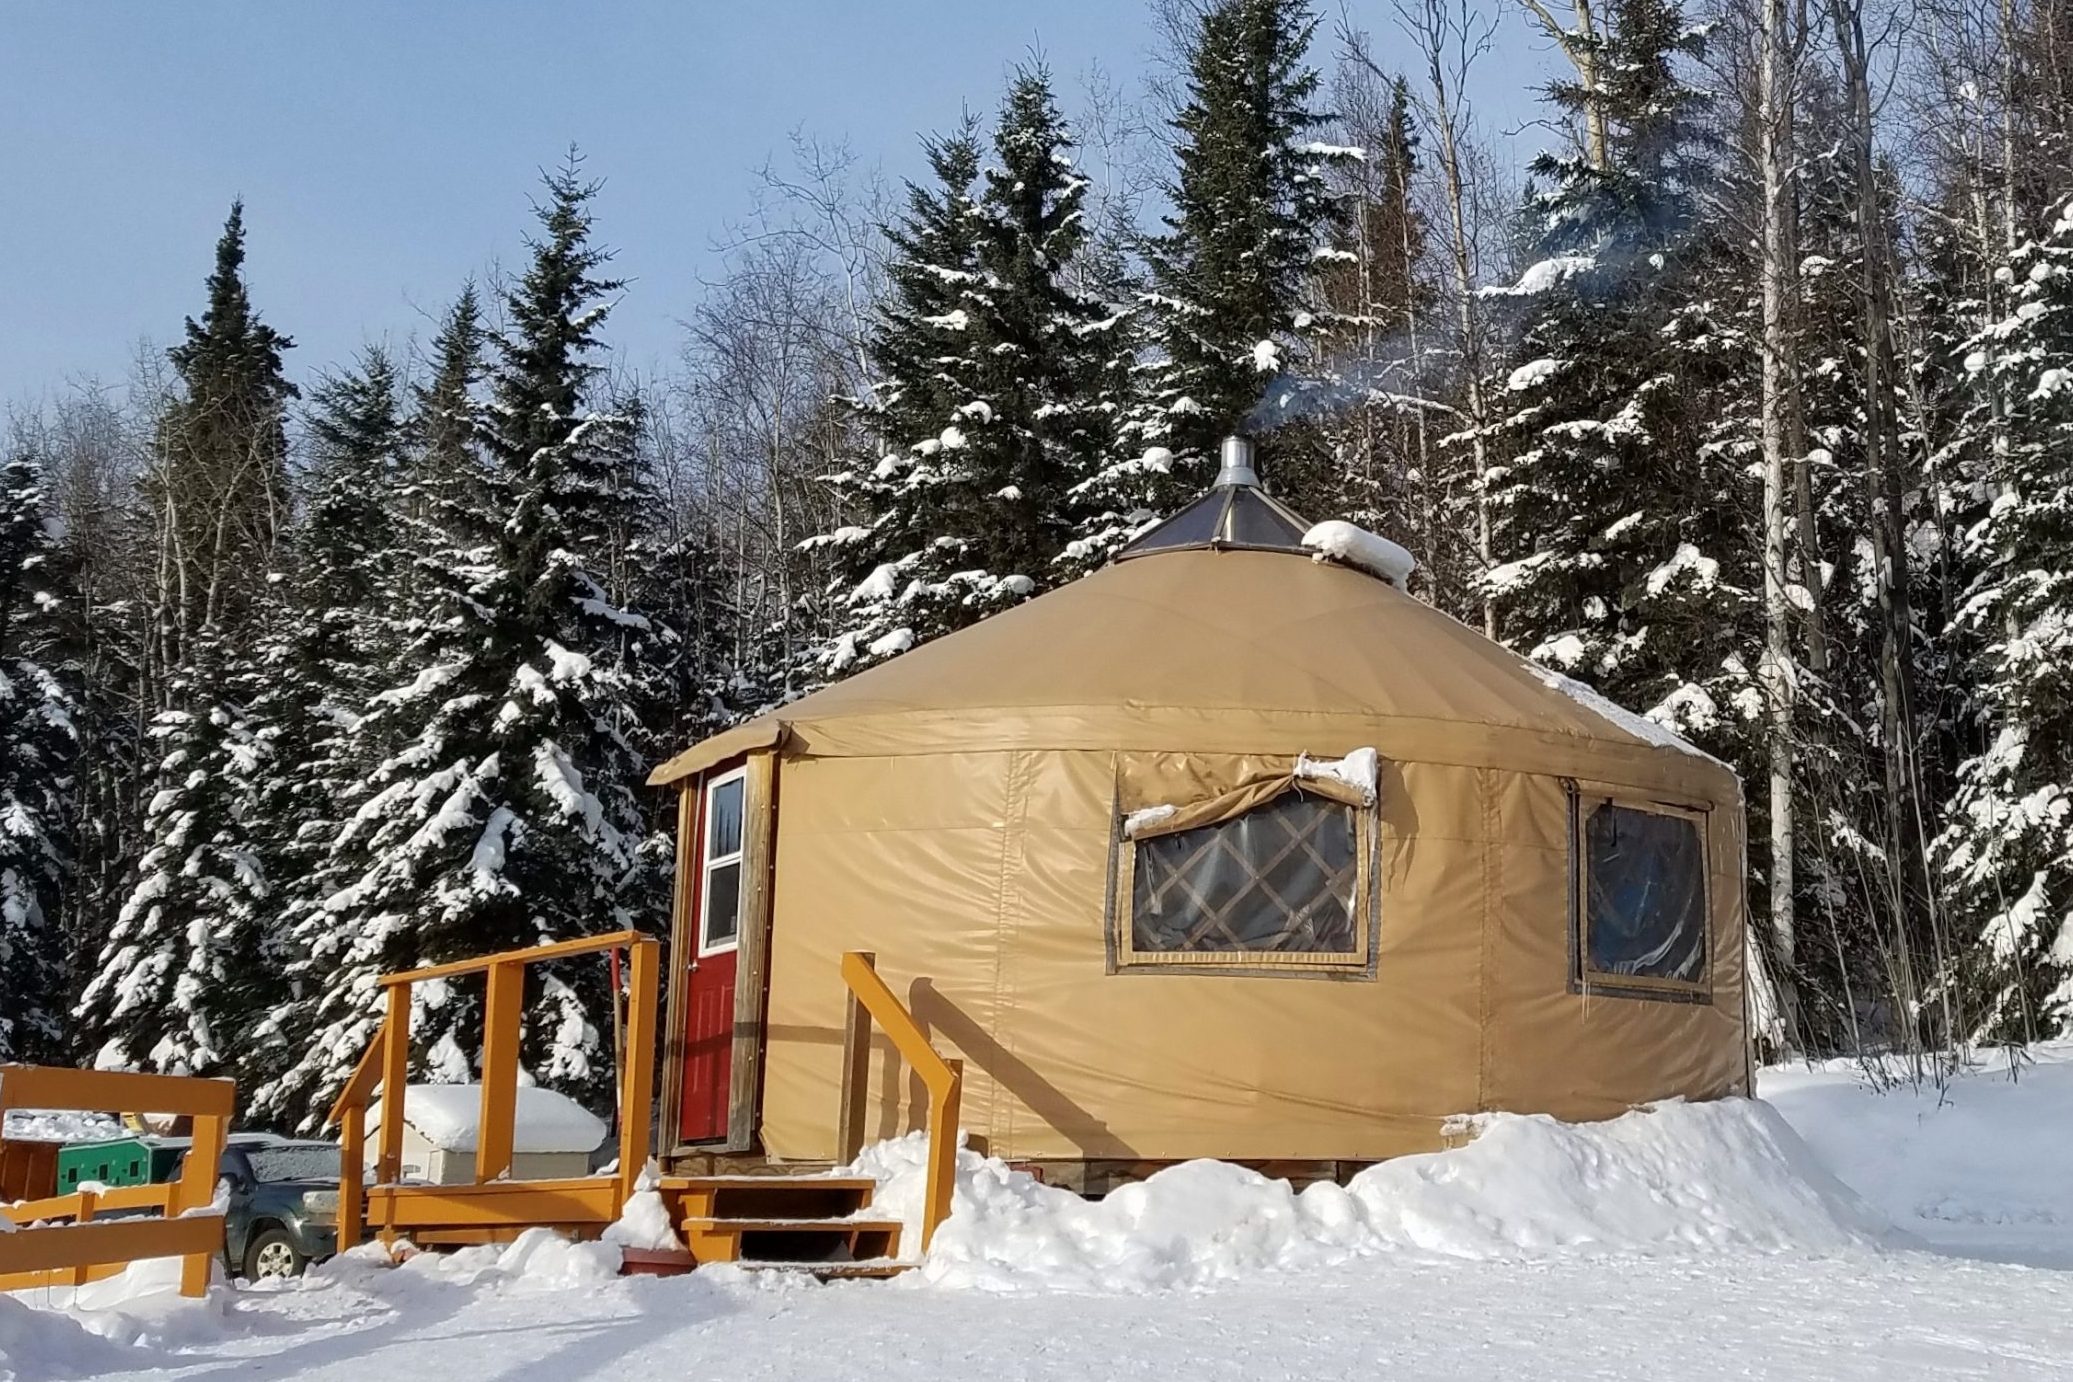 Small Circular Housing, a Yurt, in a Snowy Evergreen Setting